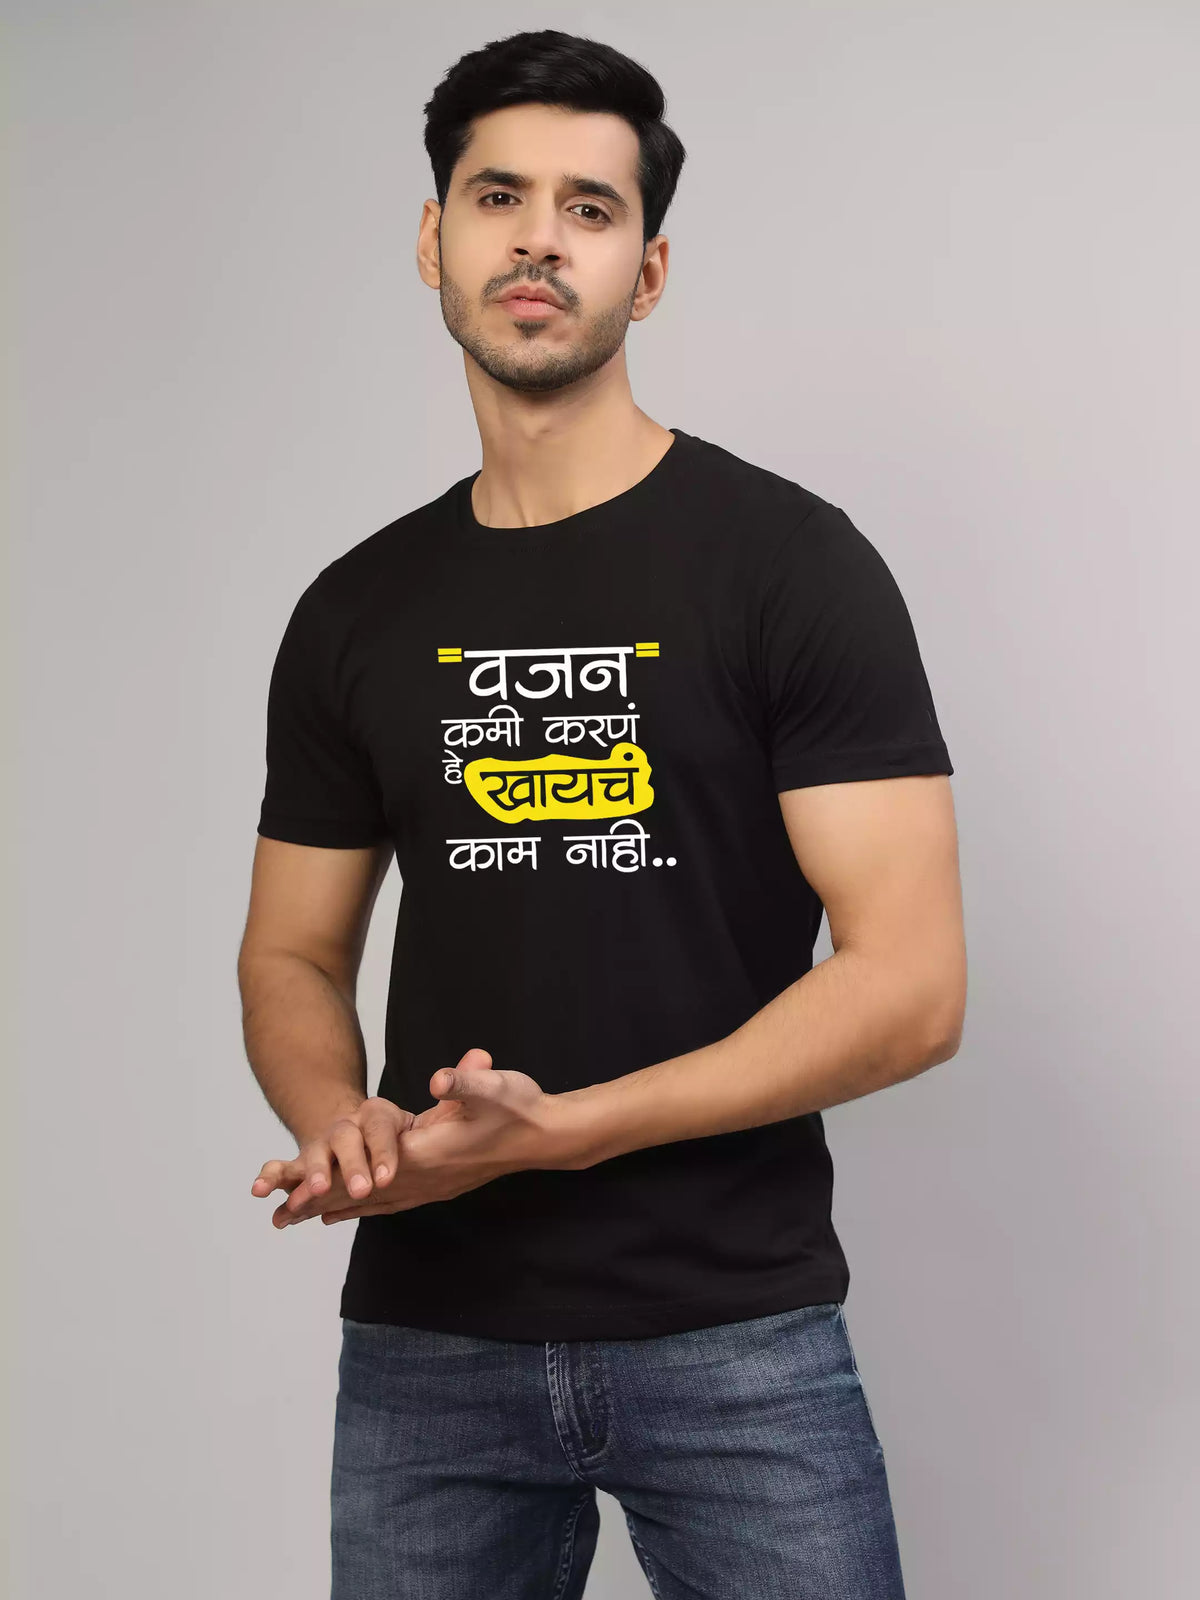 Vajan Kami - Sukhiaatma Unisex Marathi Graphic Printed plus size T-shirt